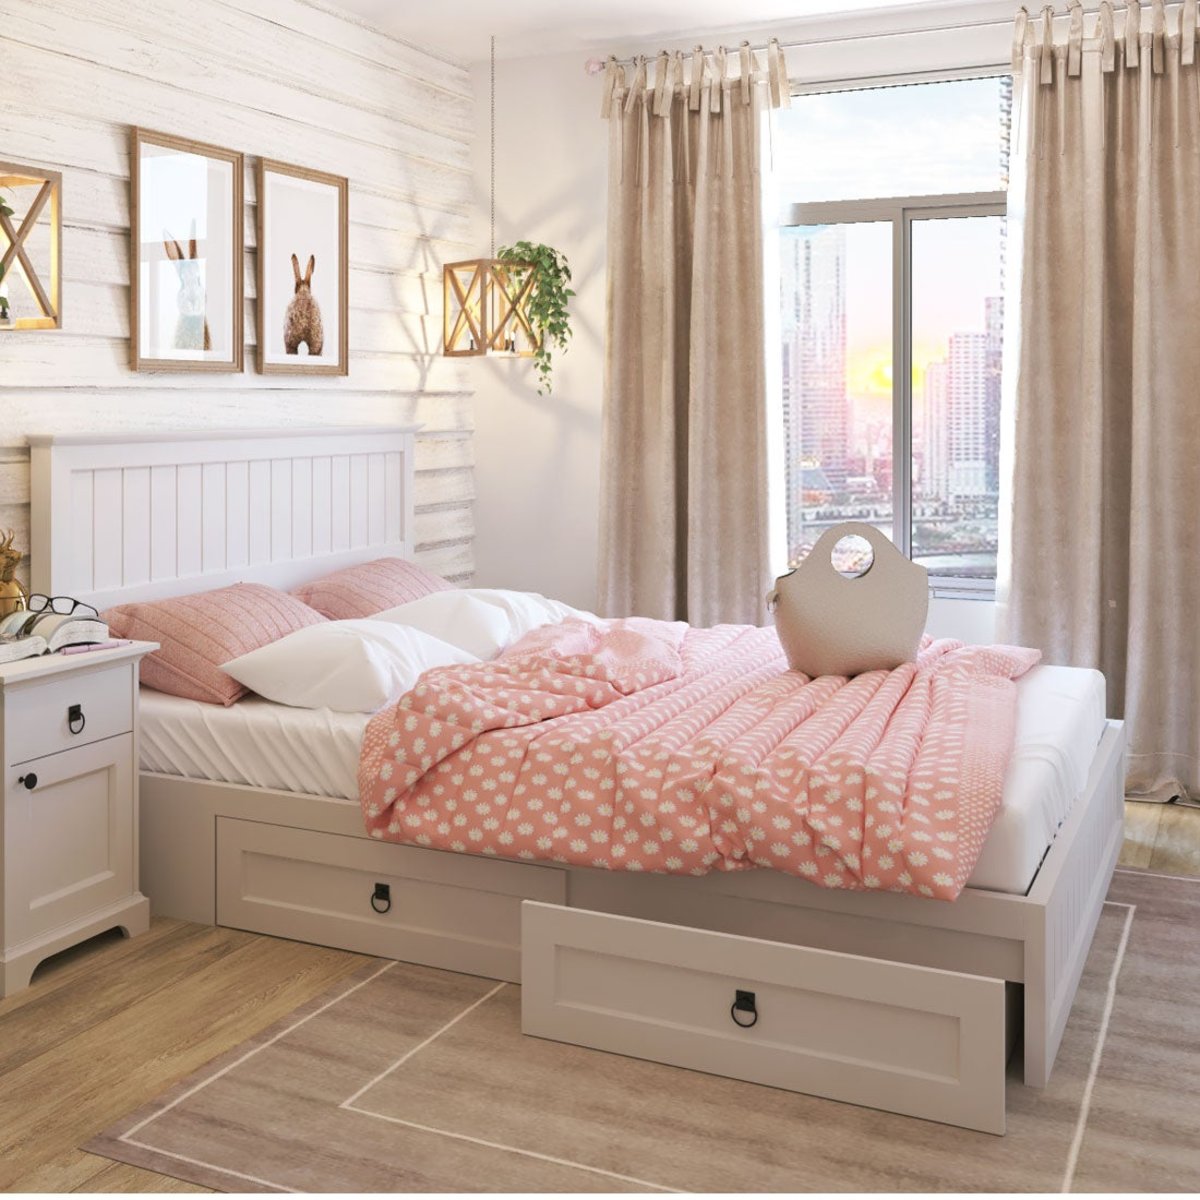 Koncept Furniture เตียงนอน รุ่น Melona ขนาด ฟุต 201x213x103 ซม. สีขาว  ฟุต ขาว วินเทจ ไม้